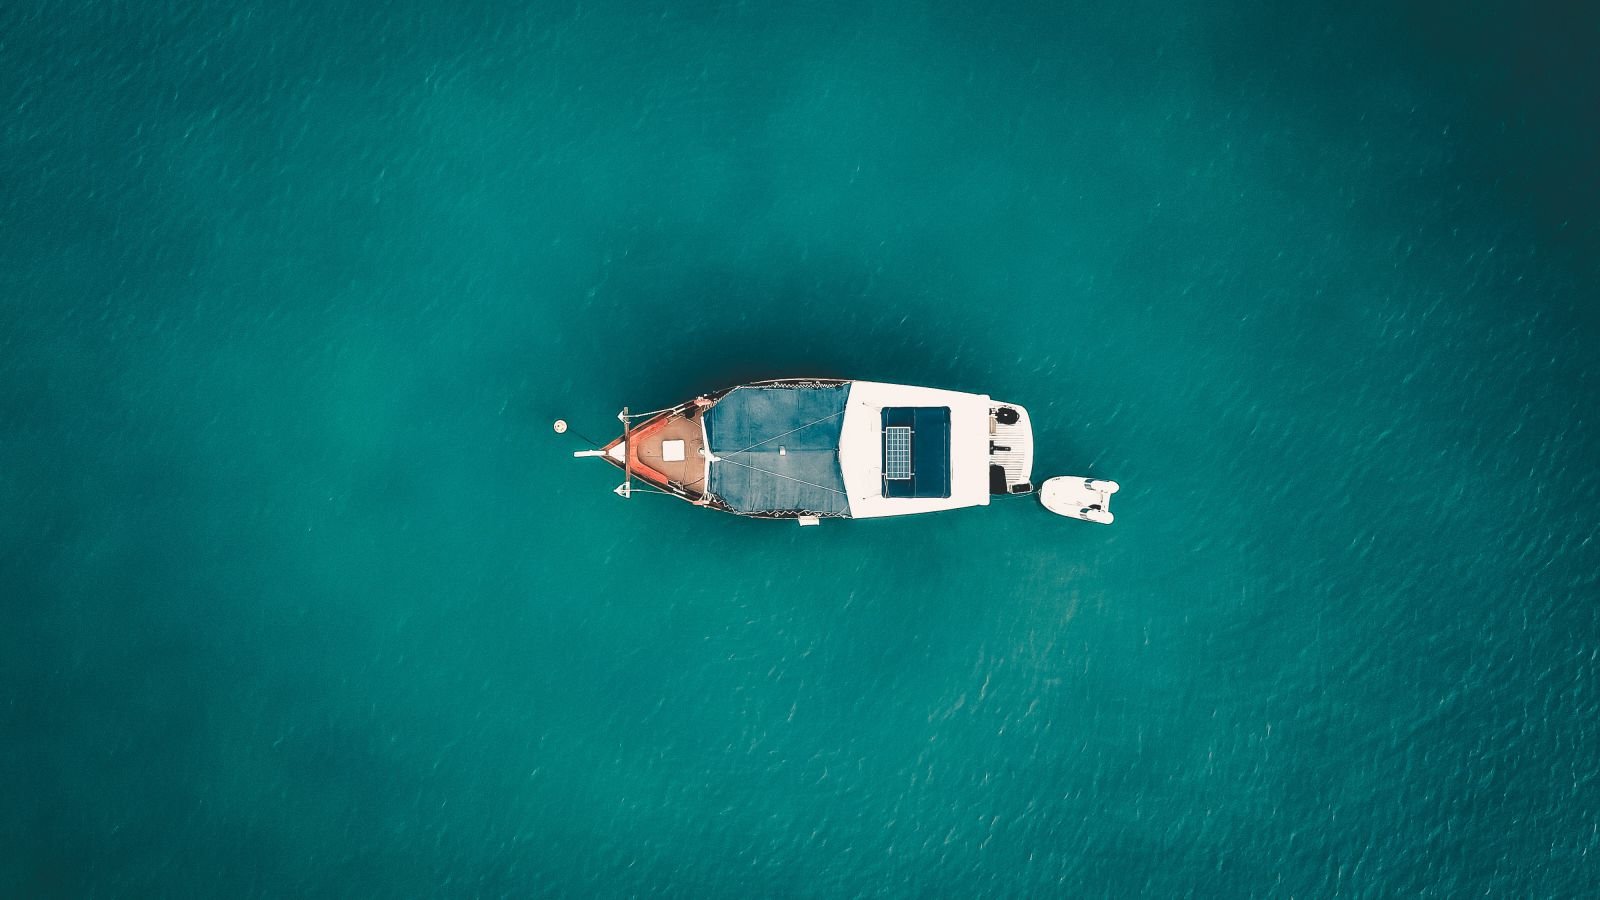 Barco no mar parado